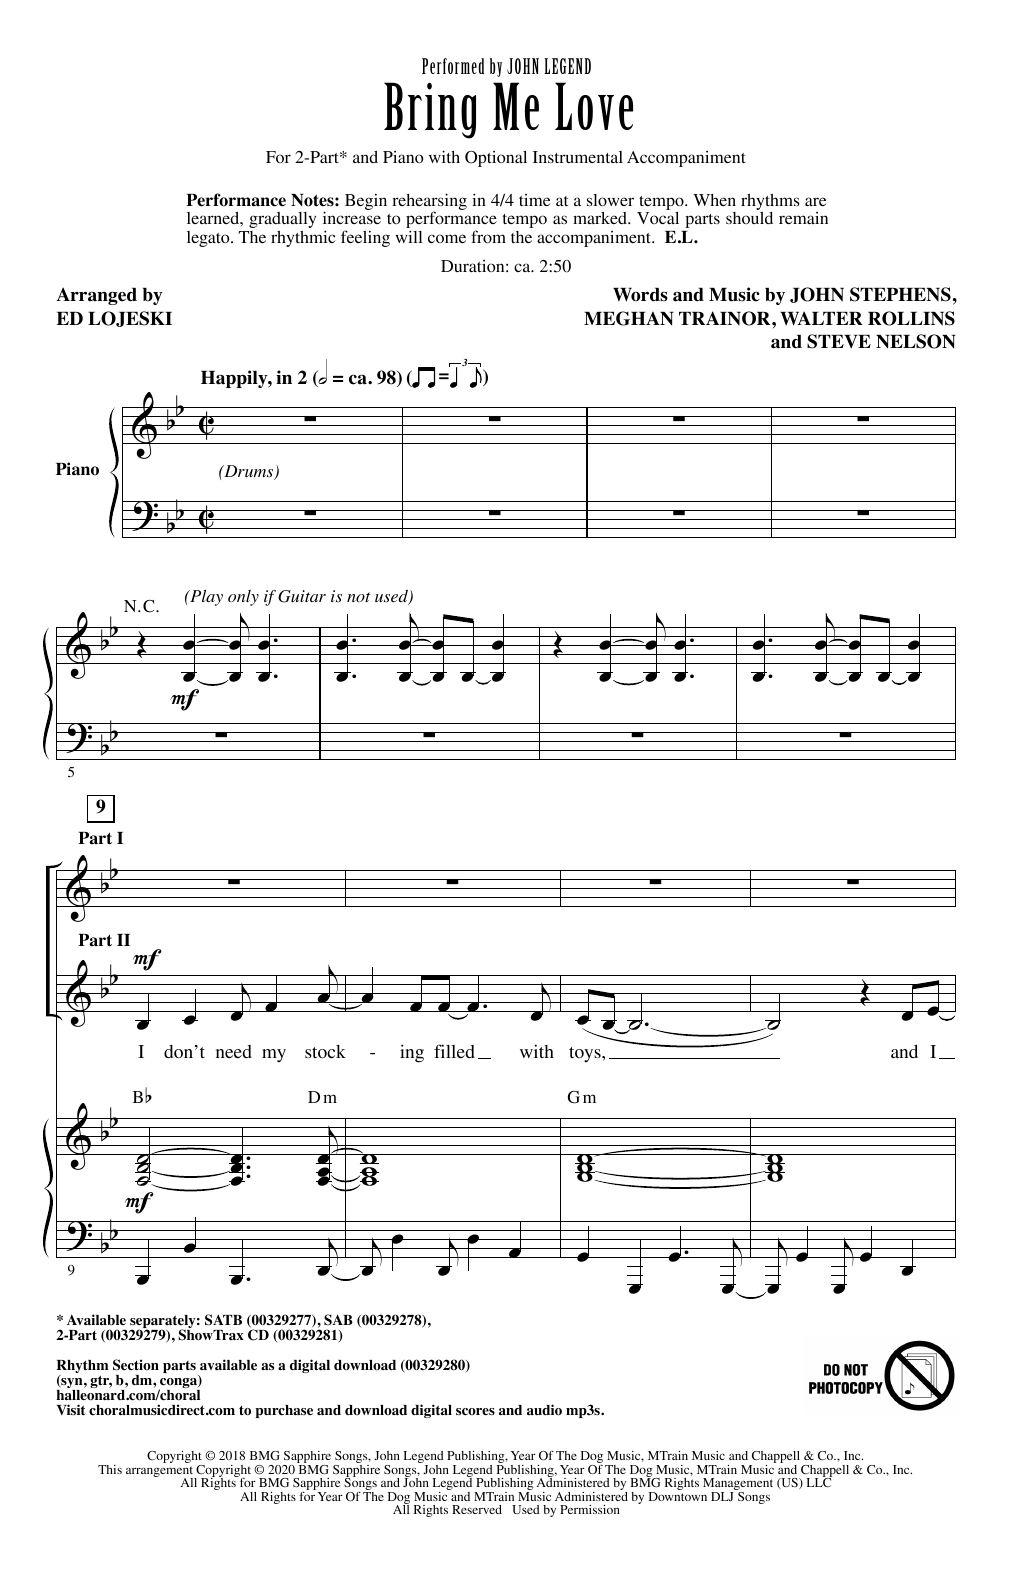 John Legend Bring Me Love (arr. Ed Lojeski) sheet music notes and chords arranged for 2-Part Choir